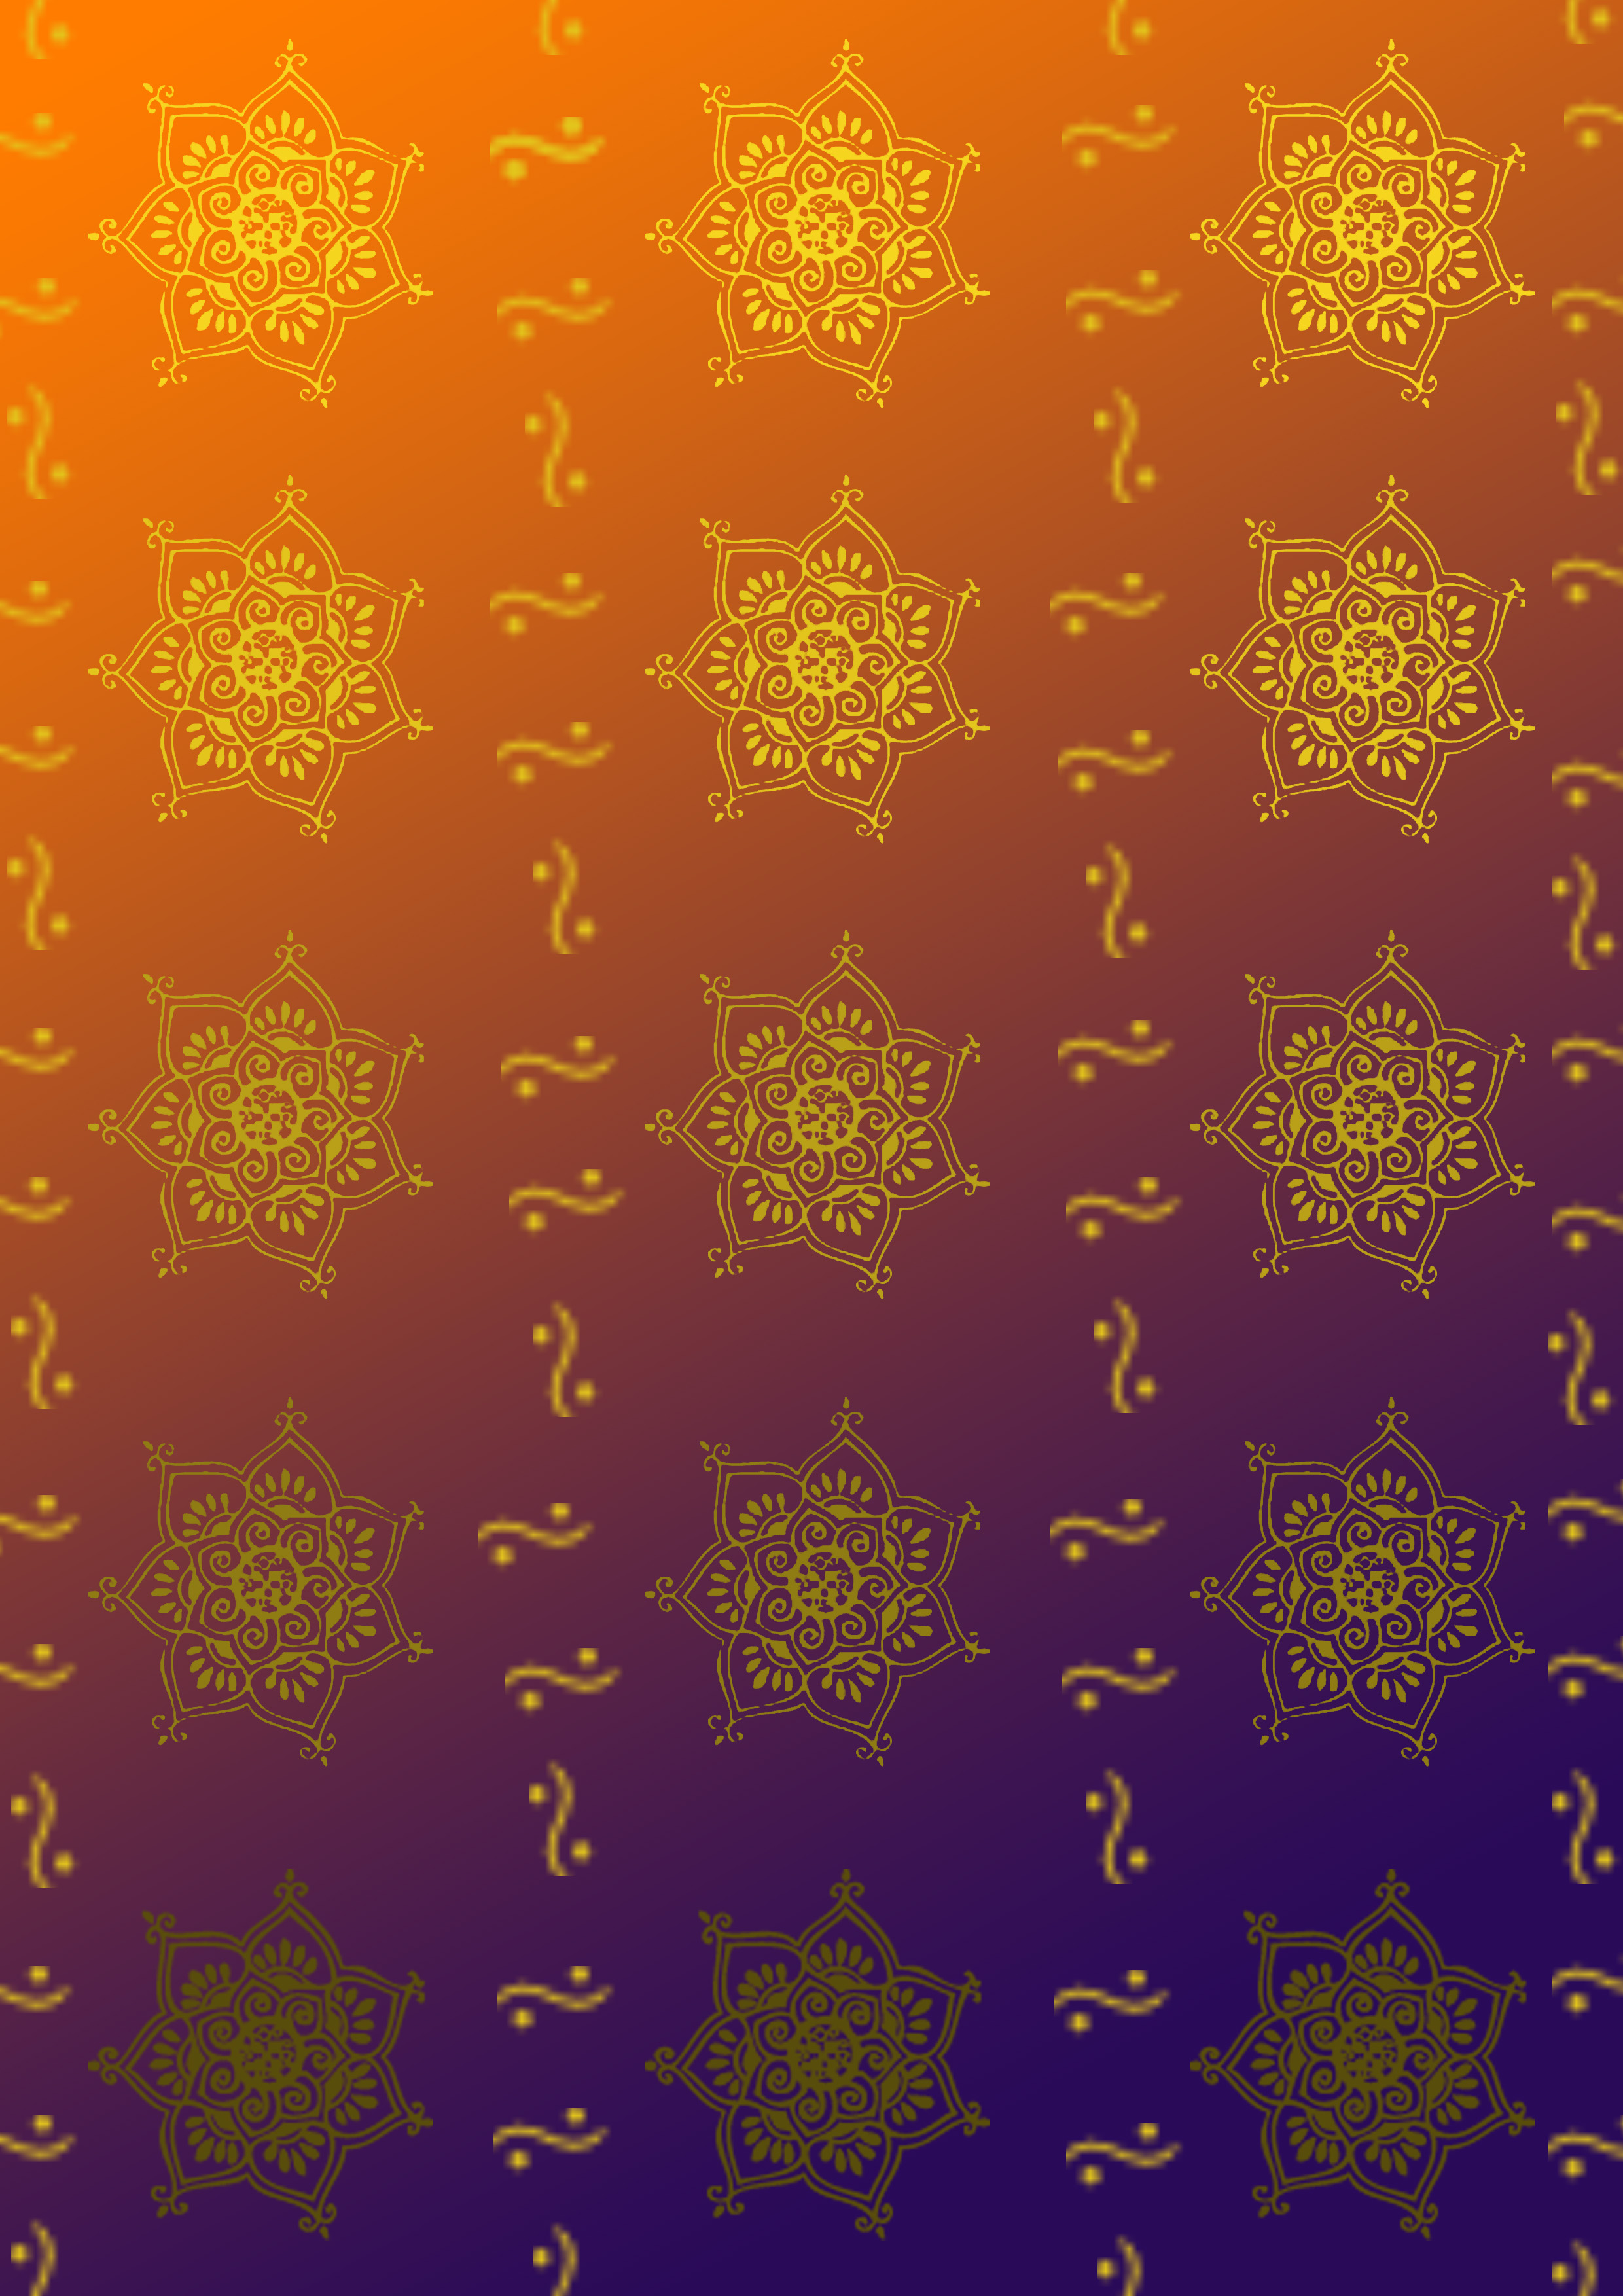  60 Orange And Purple Backgrounds  on WallpaperSafari